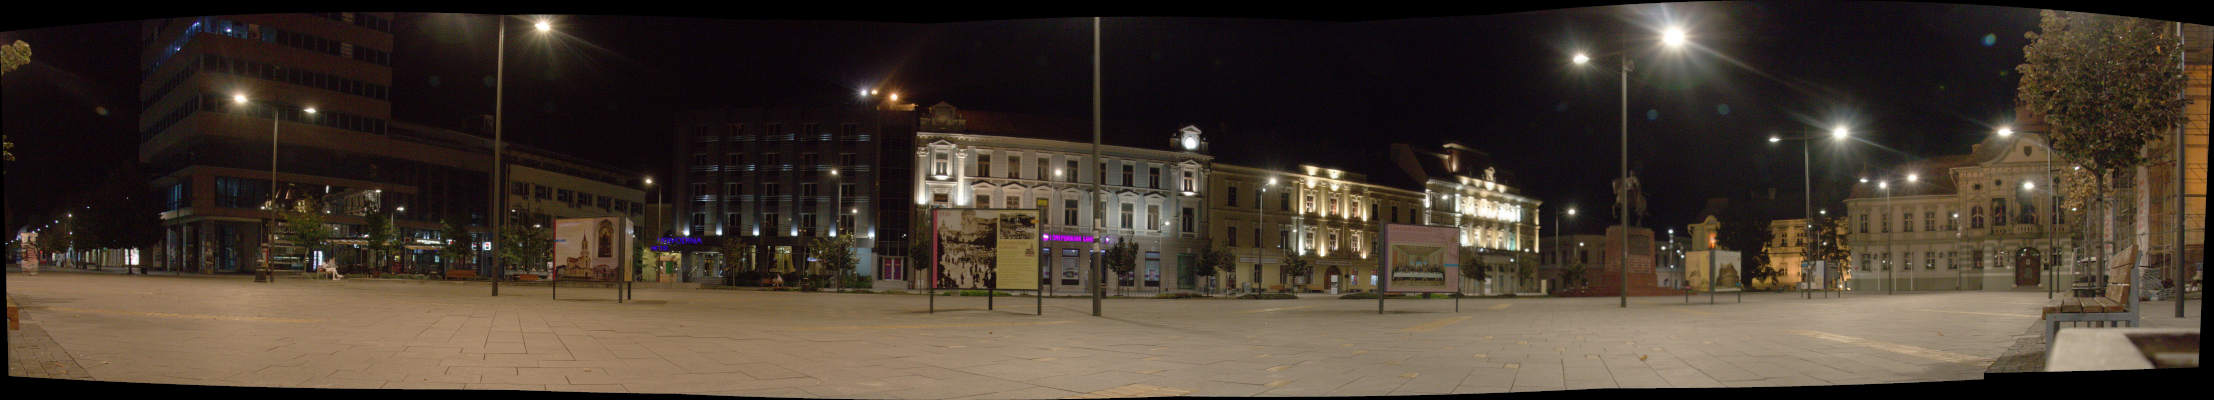 Main street on left, city hall on right.